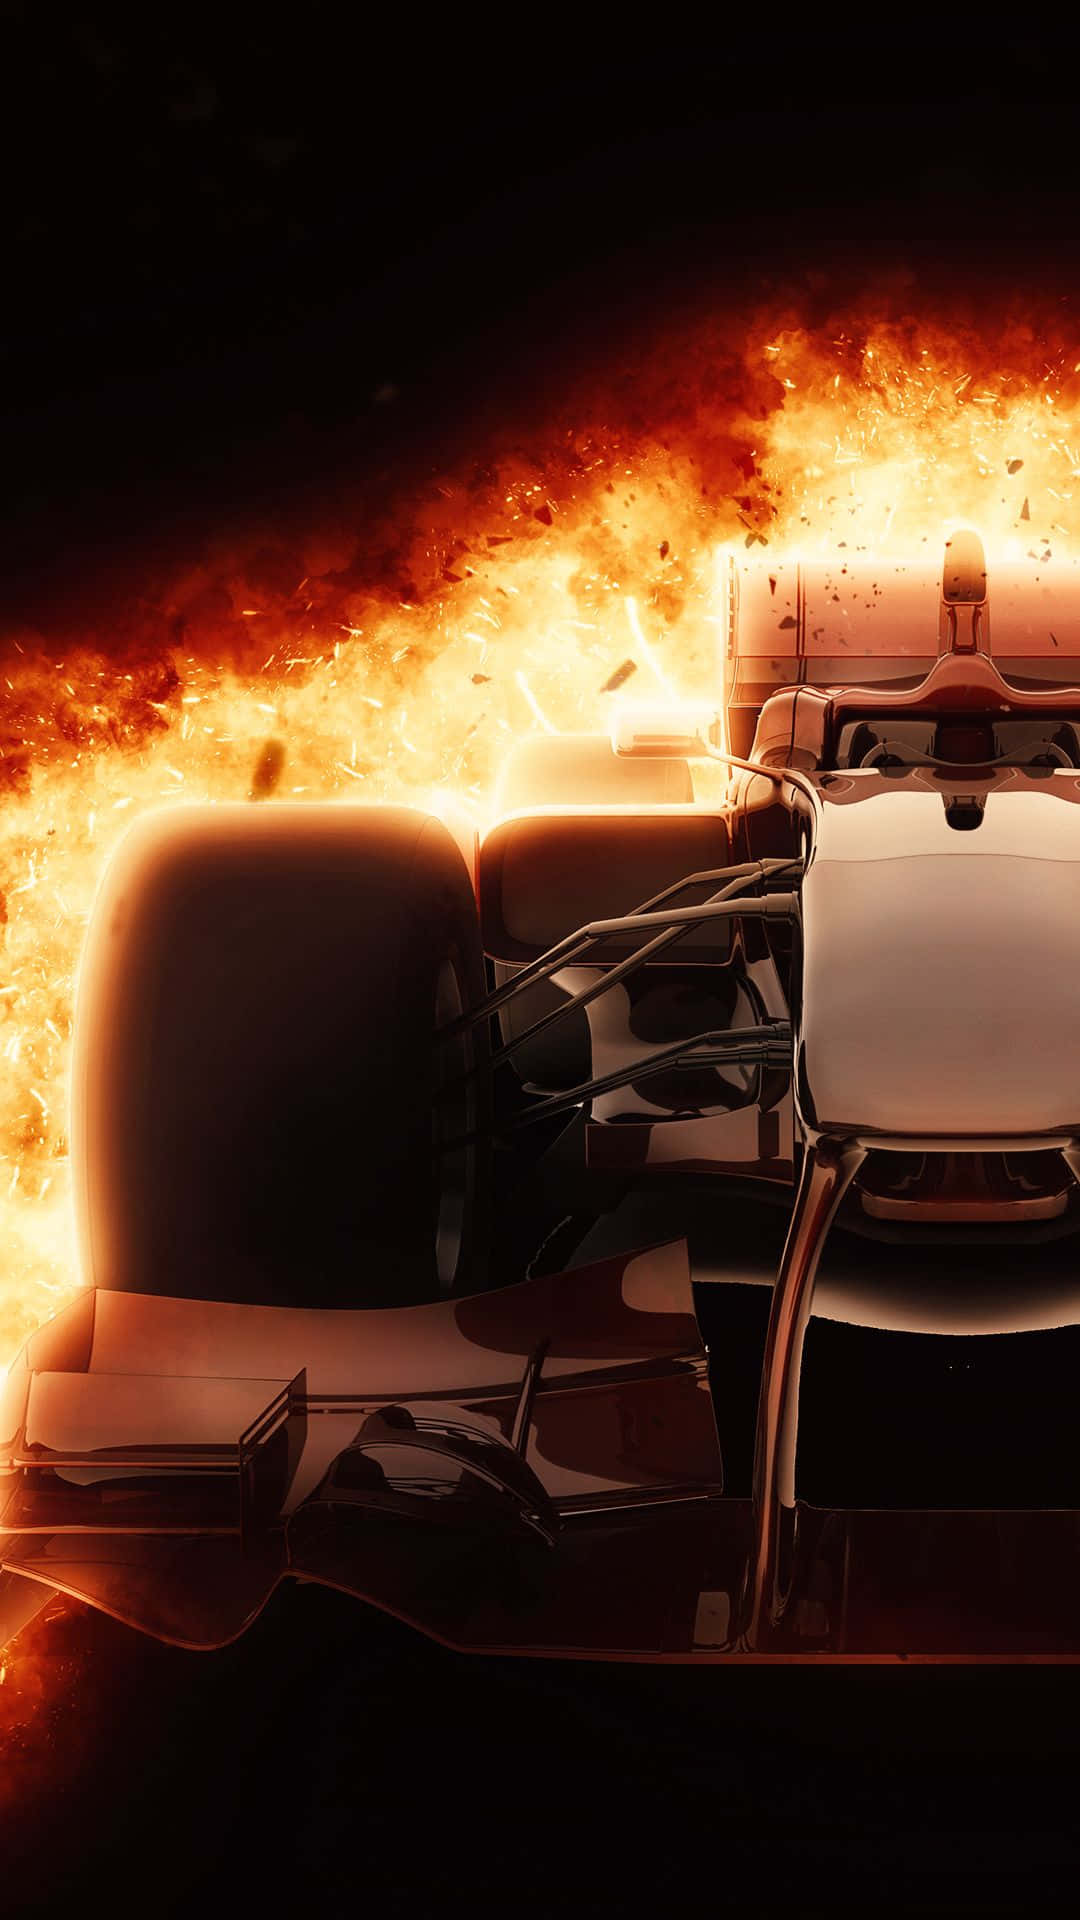 Pixel 3xl F1 2016 Burning Racing Car Background